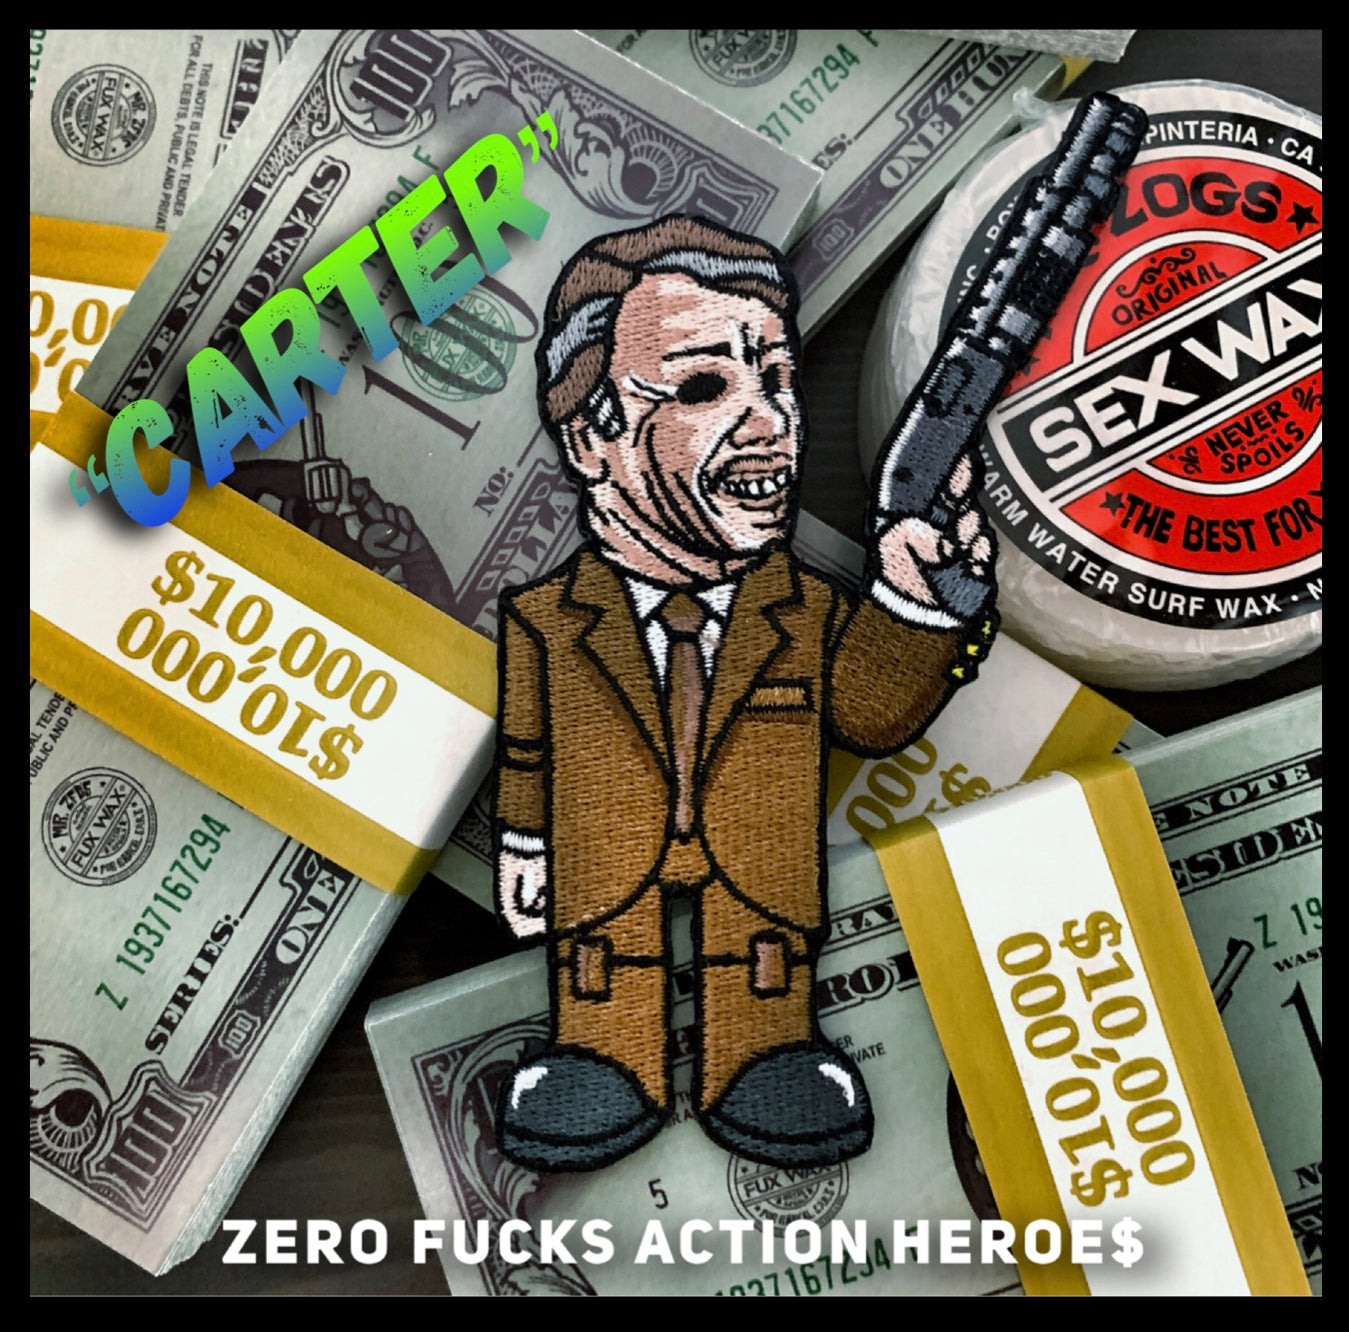 Zero Fucks Action Heroes ‘POINT BREAK’ Morale Patch Series - Carter